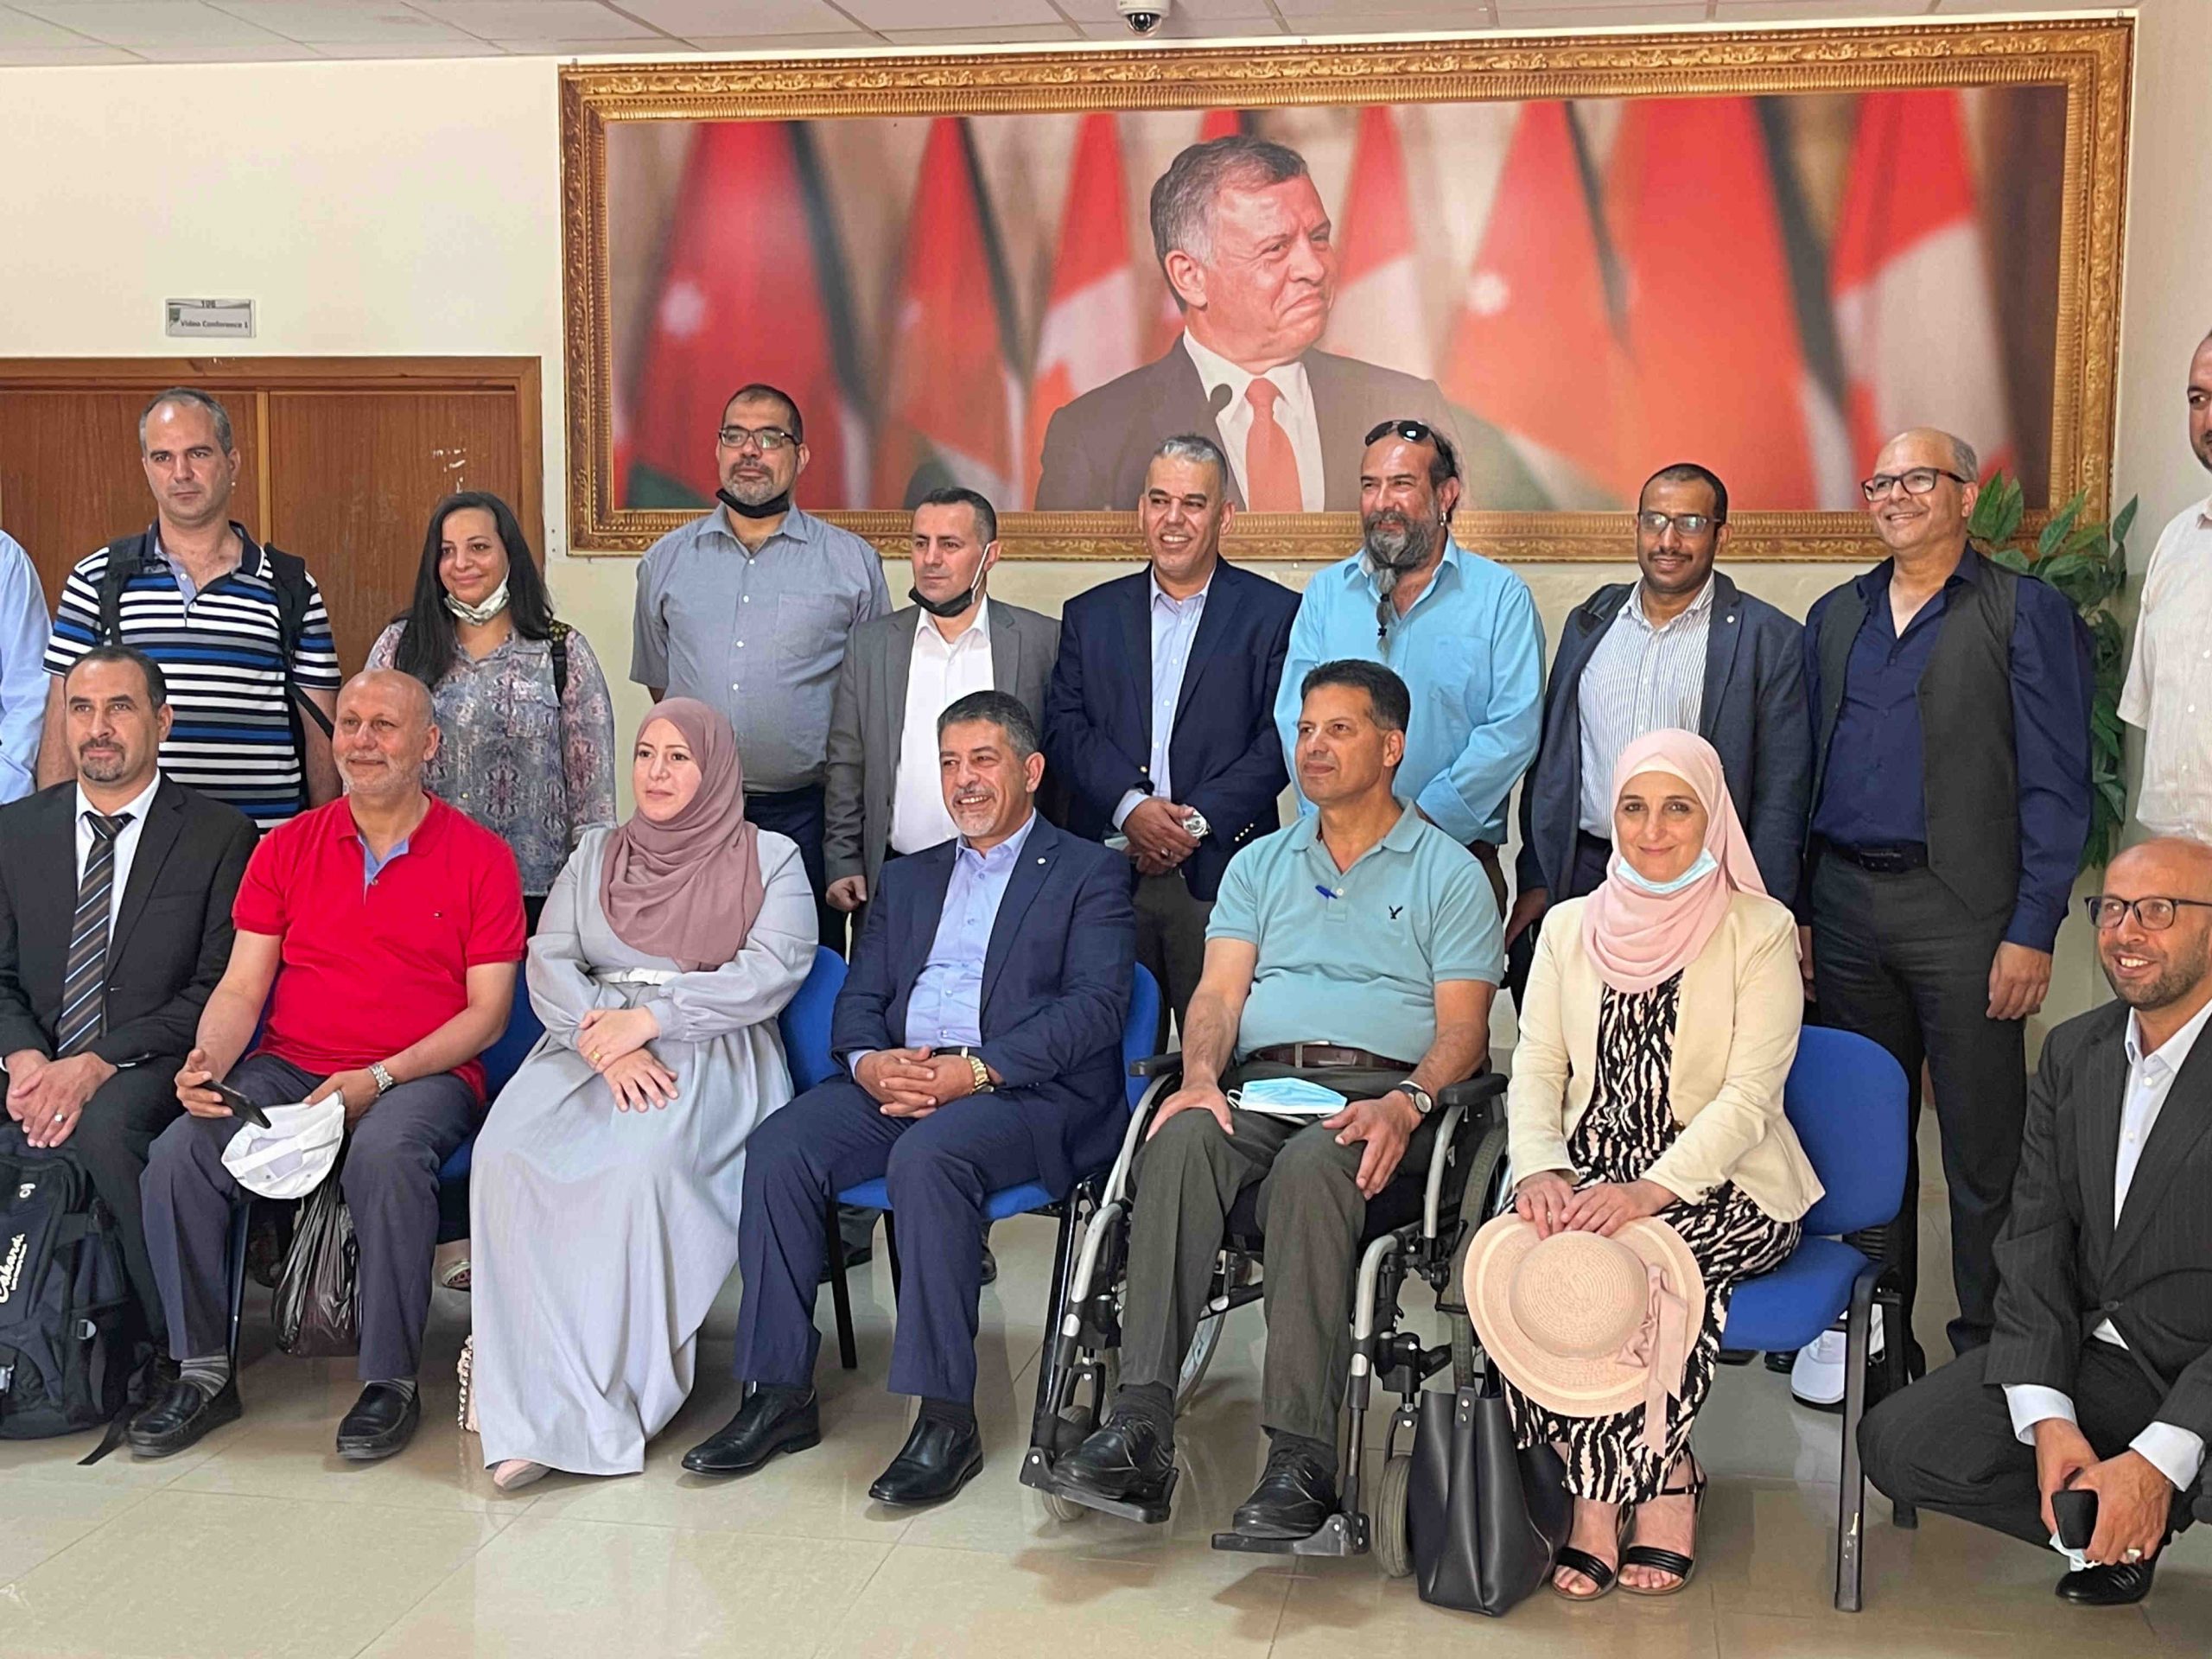 Management Meeting at University of Jordan Aqaba Group with staff Smiling